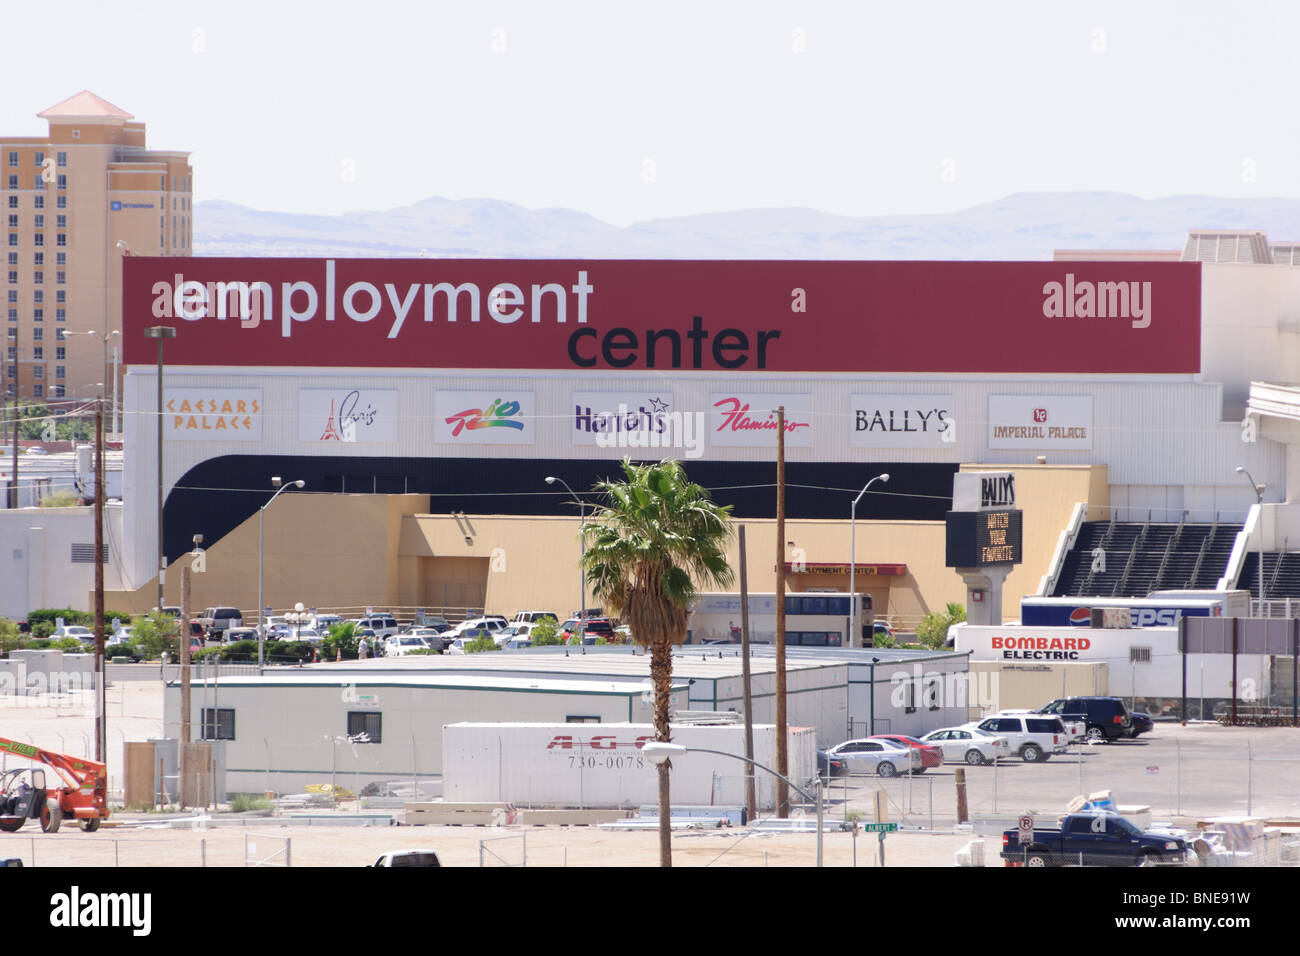 Las Vegas employment center Stock Photo